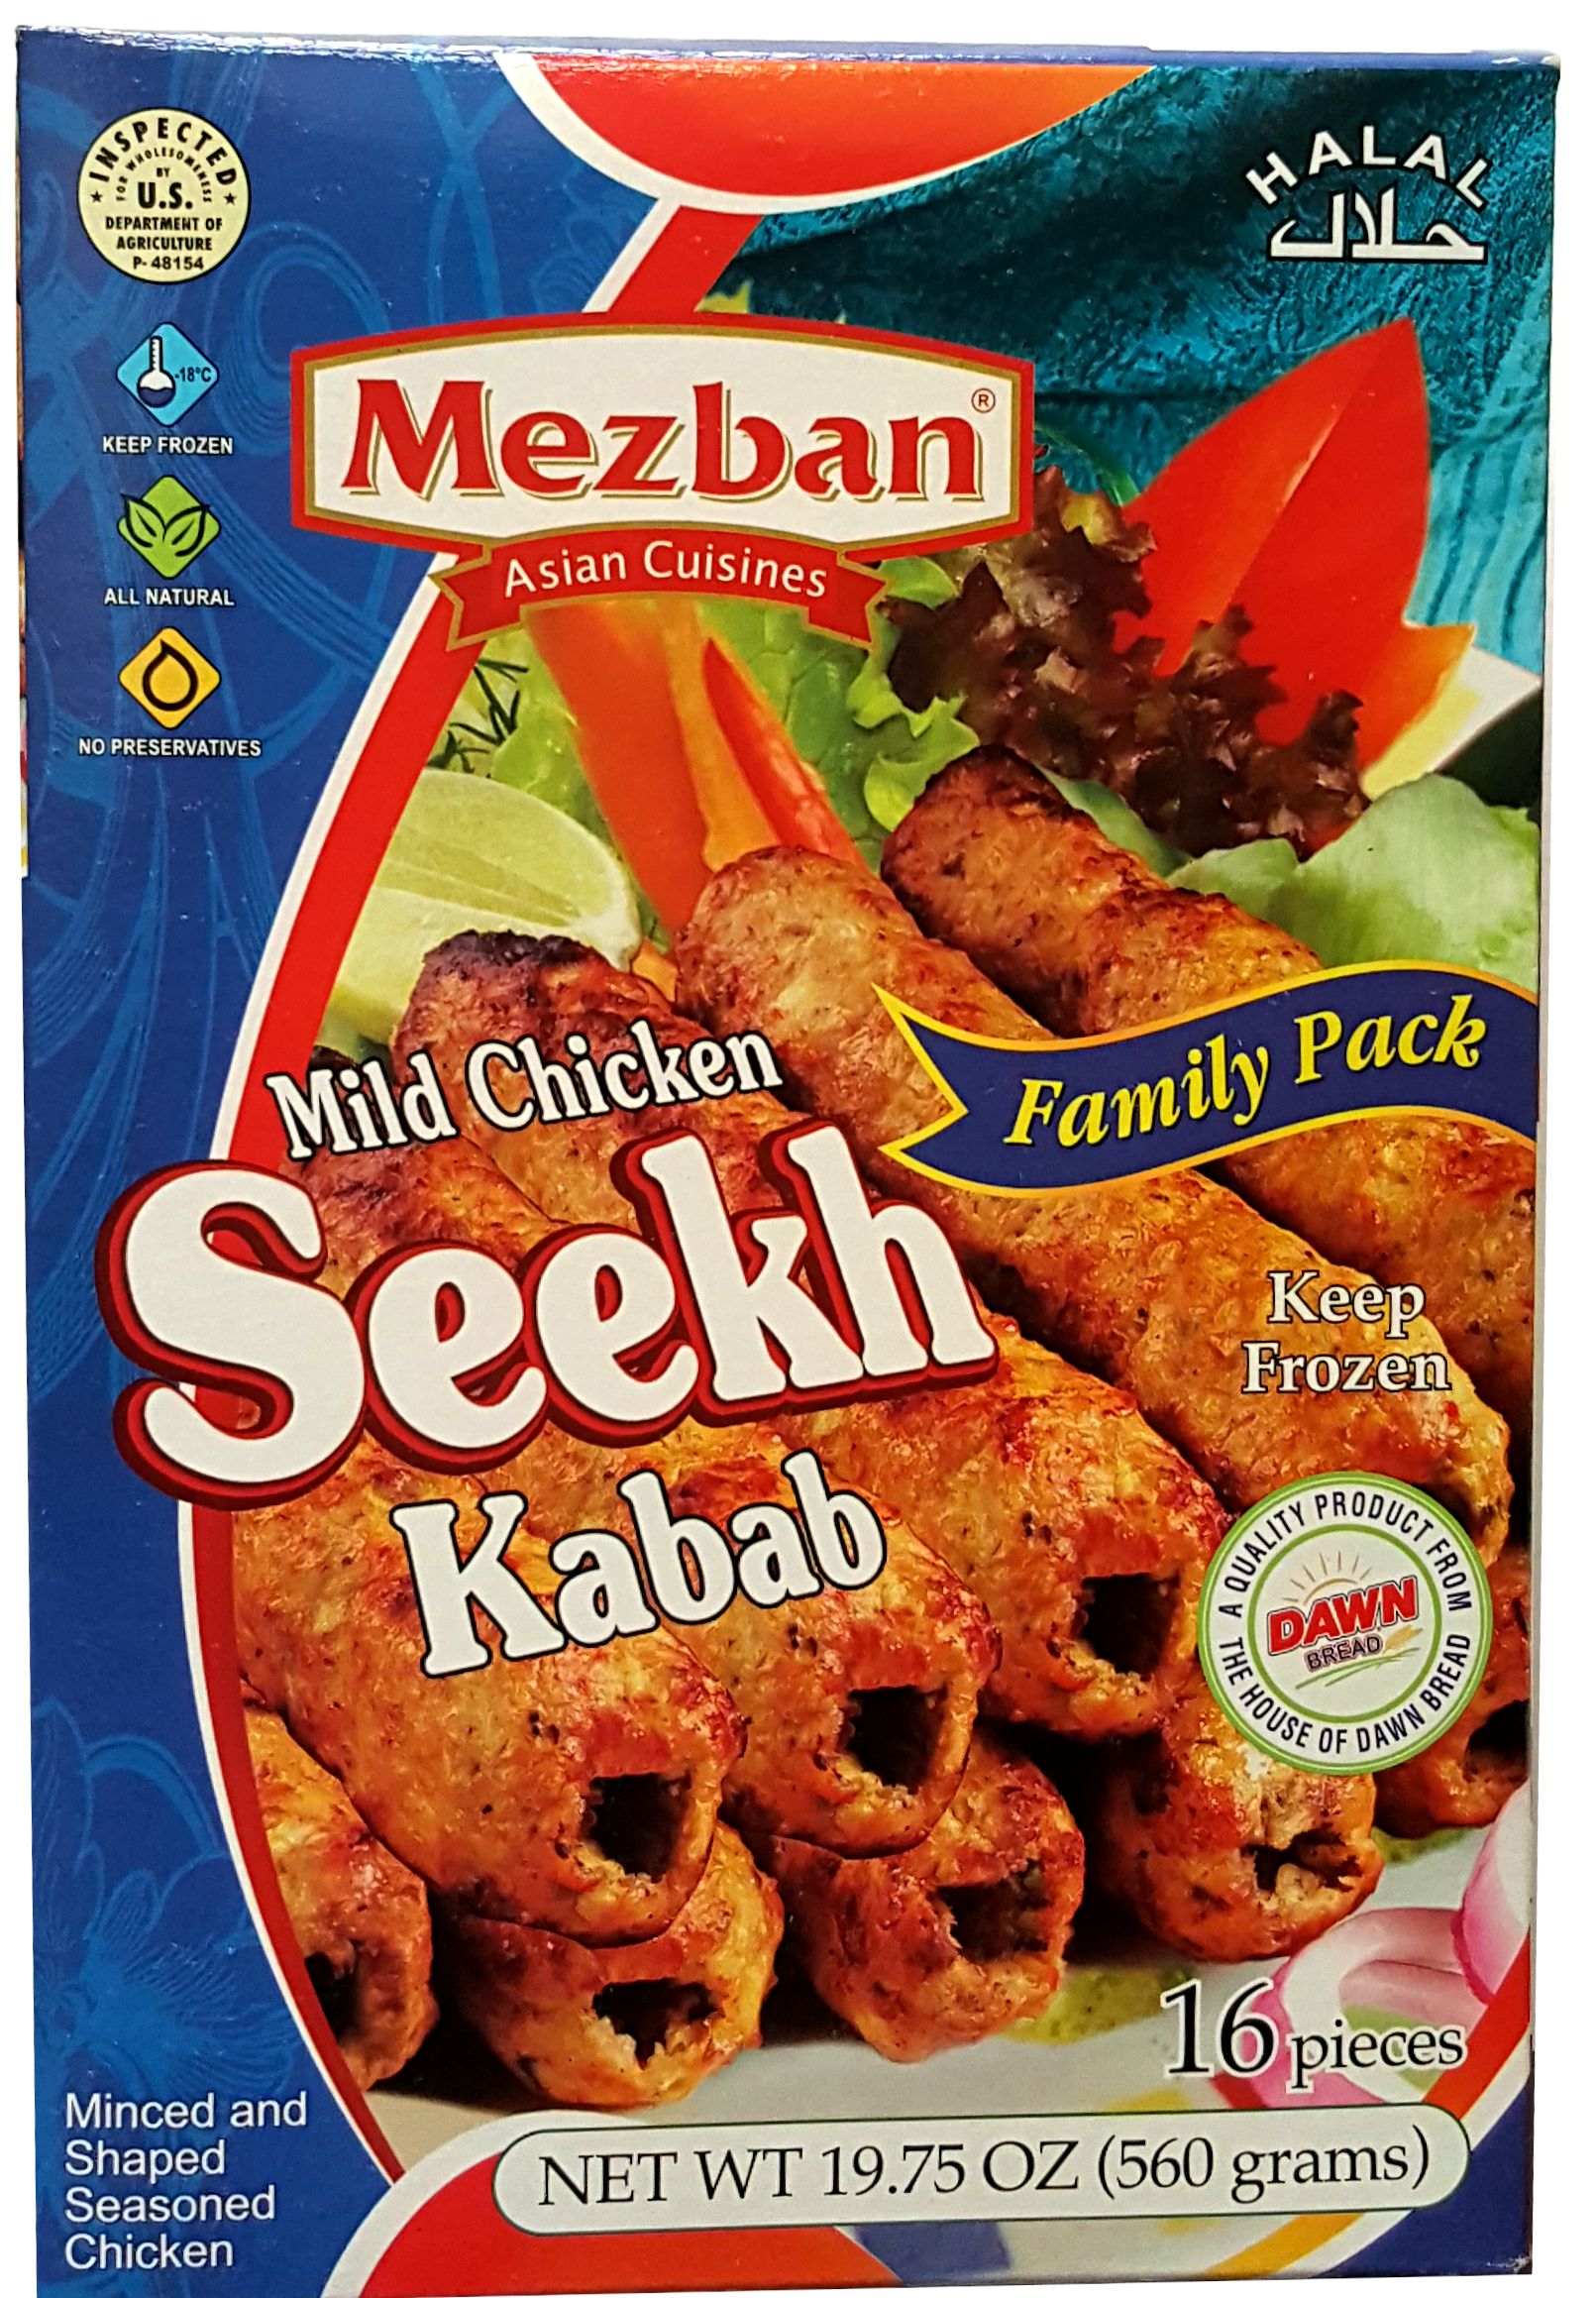 Chicken Seekh Kabab - Mild (Family Pack)